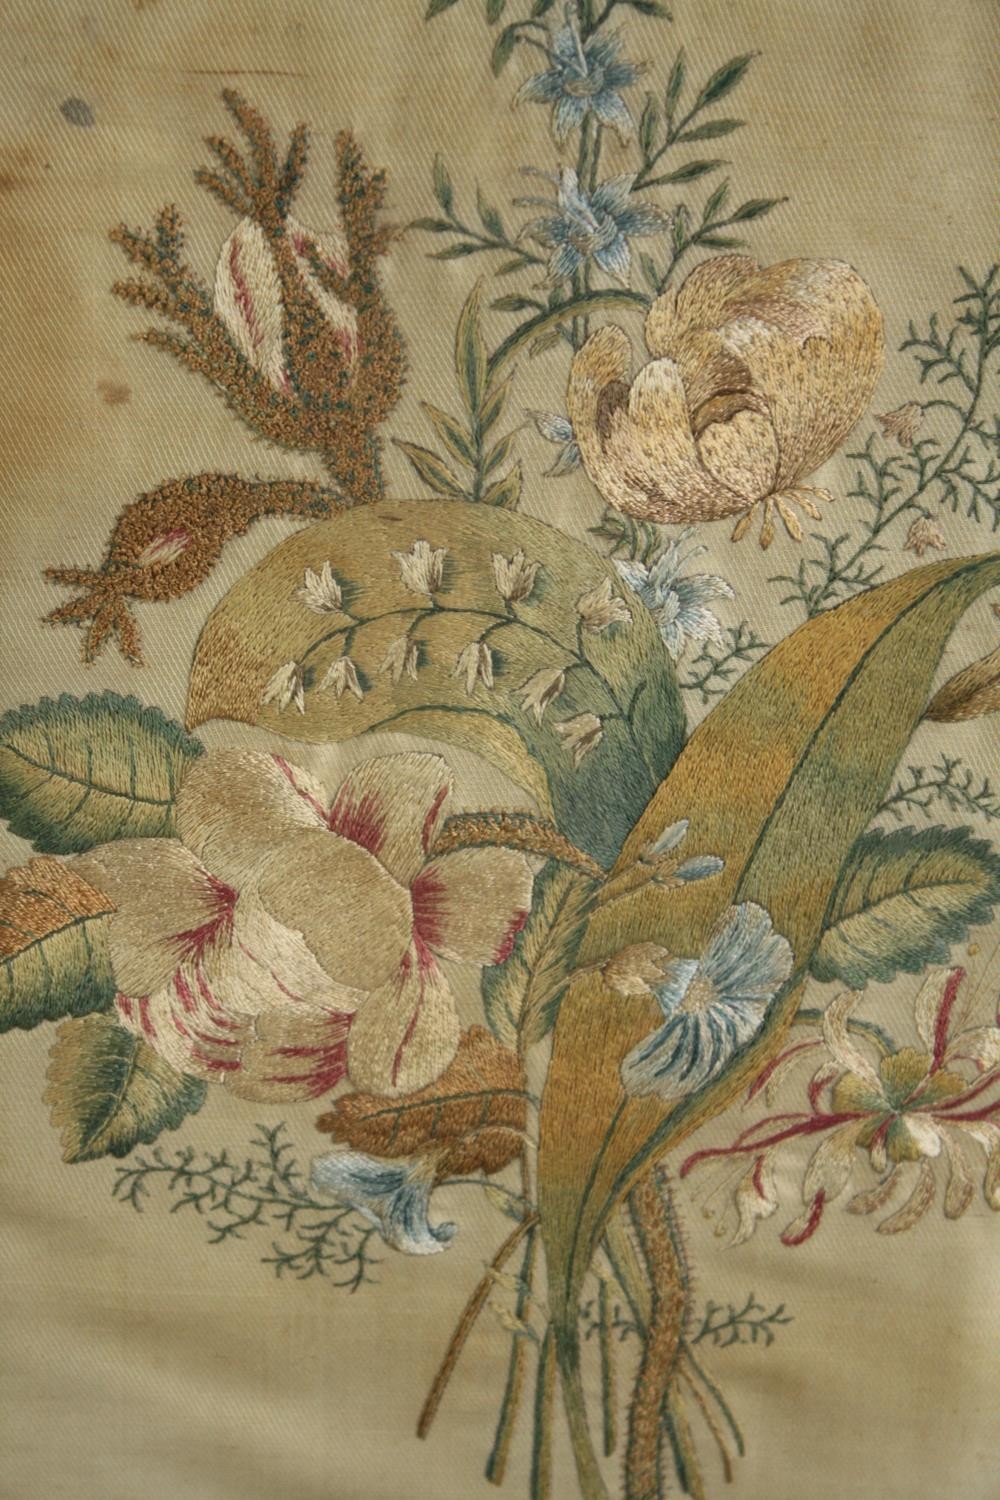 A framed embroidery. Flowers. Early twentieth century. Framed and glazed. H.42 W.35cm.